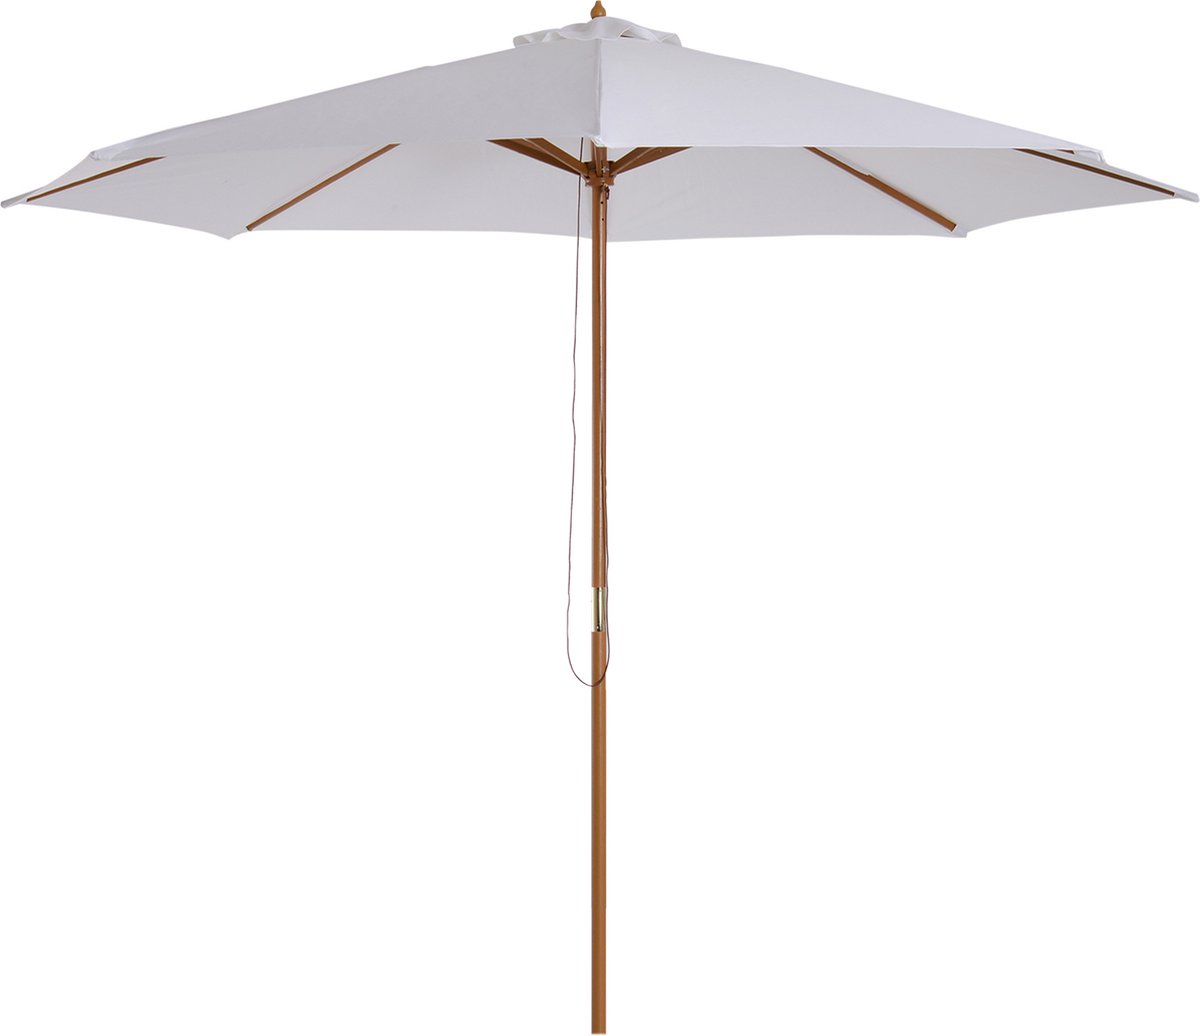 Outsunny Zonnescherm houten parasol tuinscherm balkonparasol 3 x 2,5 m wit marktparasol 01-0244